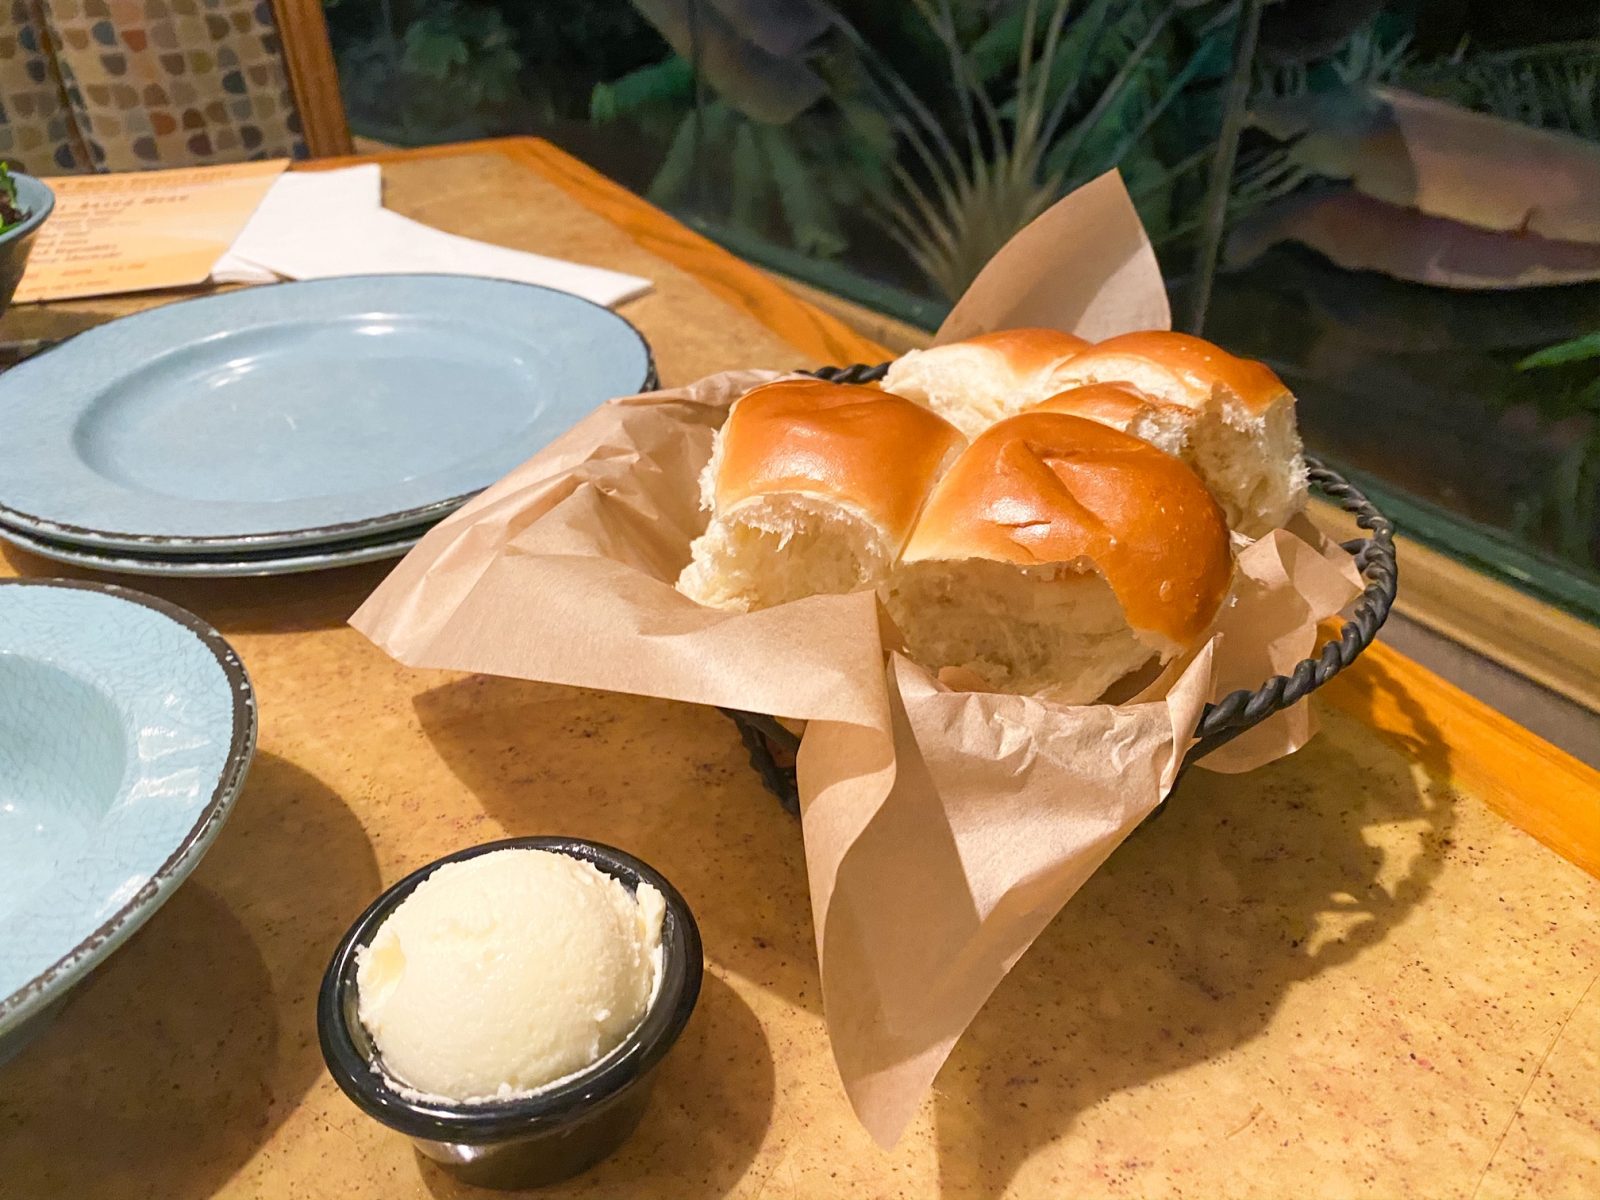 dinner rolls and butter at Disney World Garden Grill